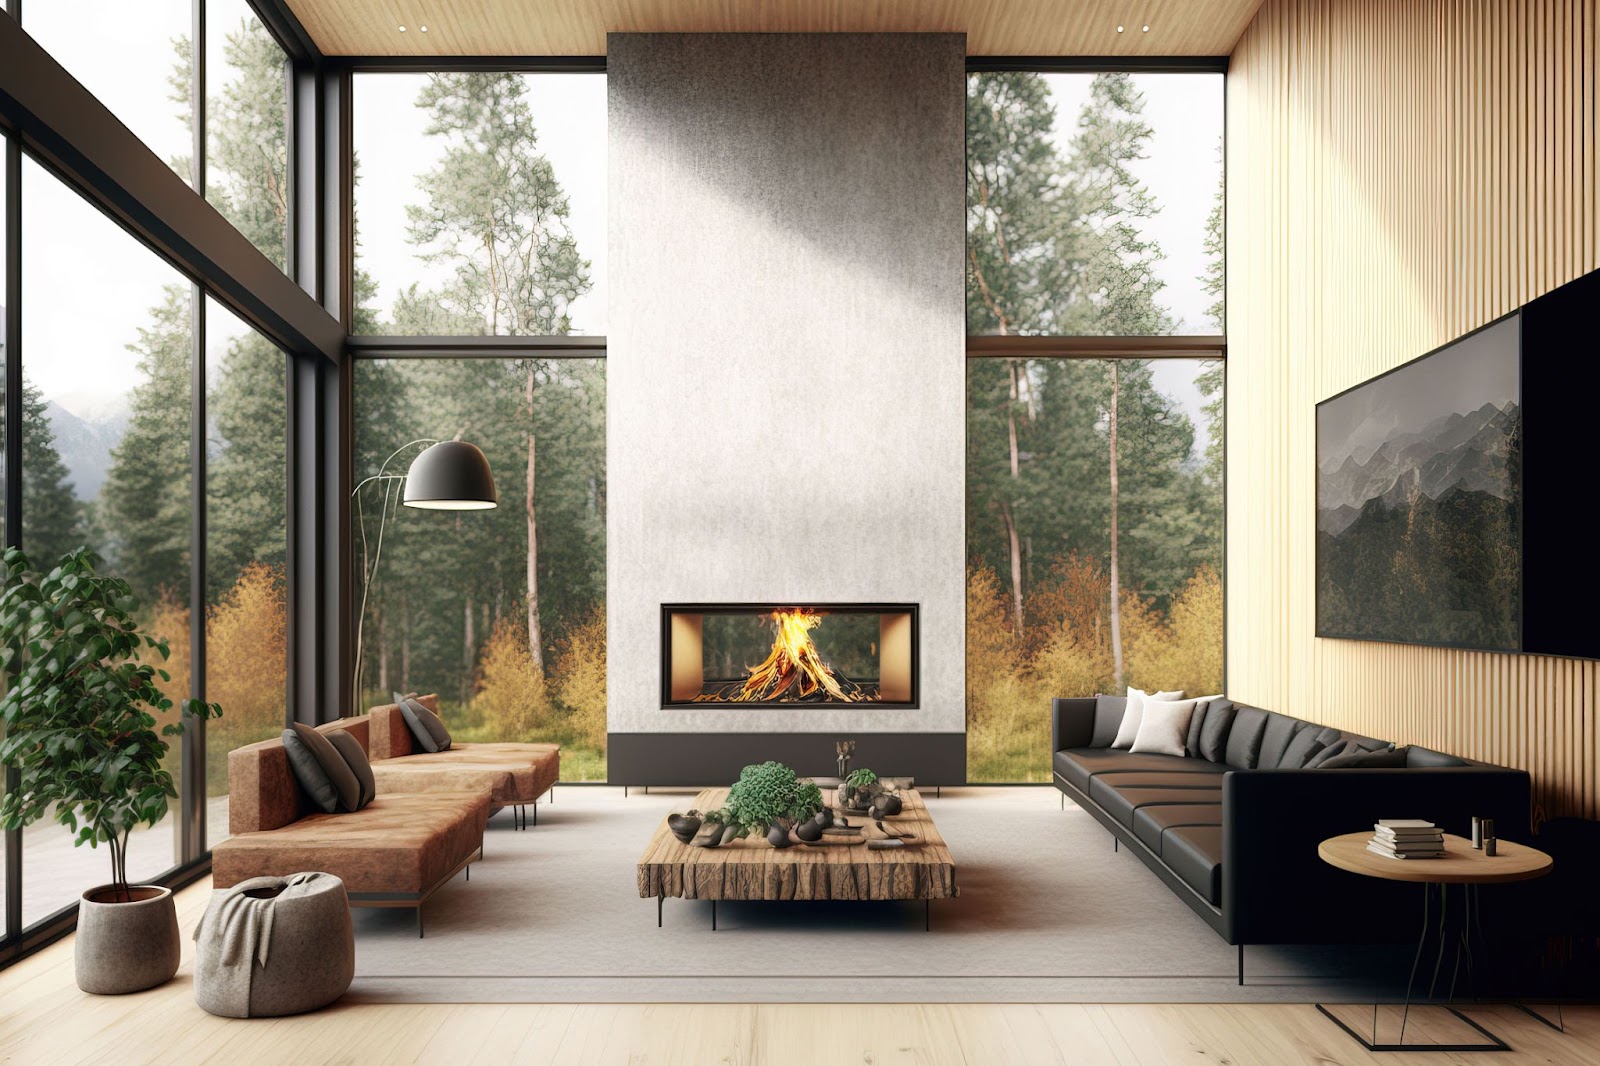 A sleek mountain home with a modern fireplace.